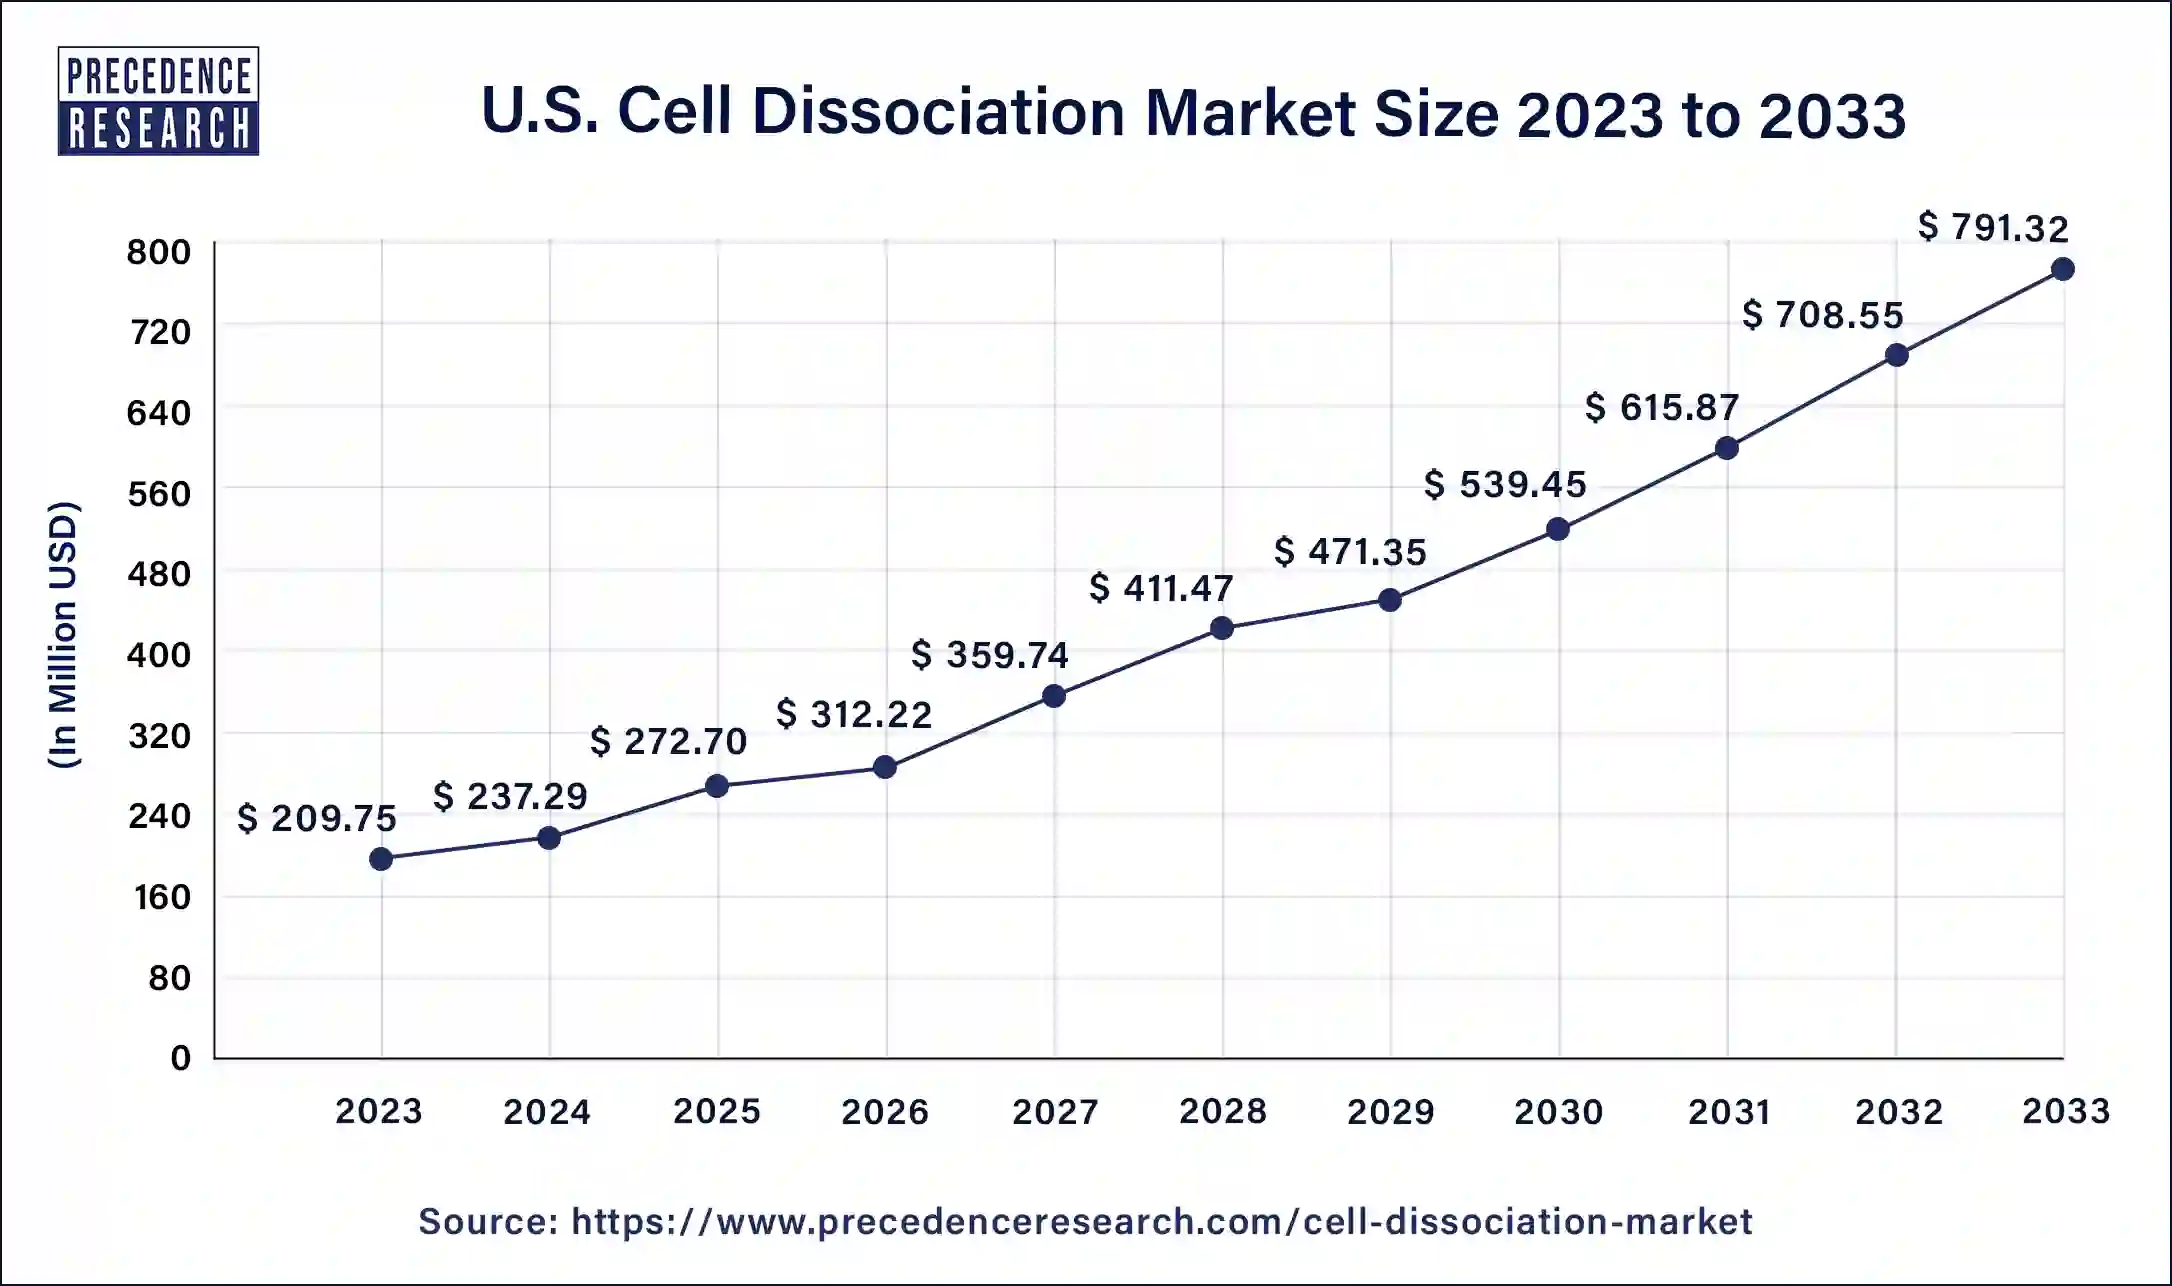 U.S. Cell Dissociation Market Size 2024 to 2033